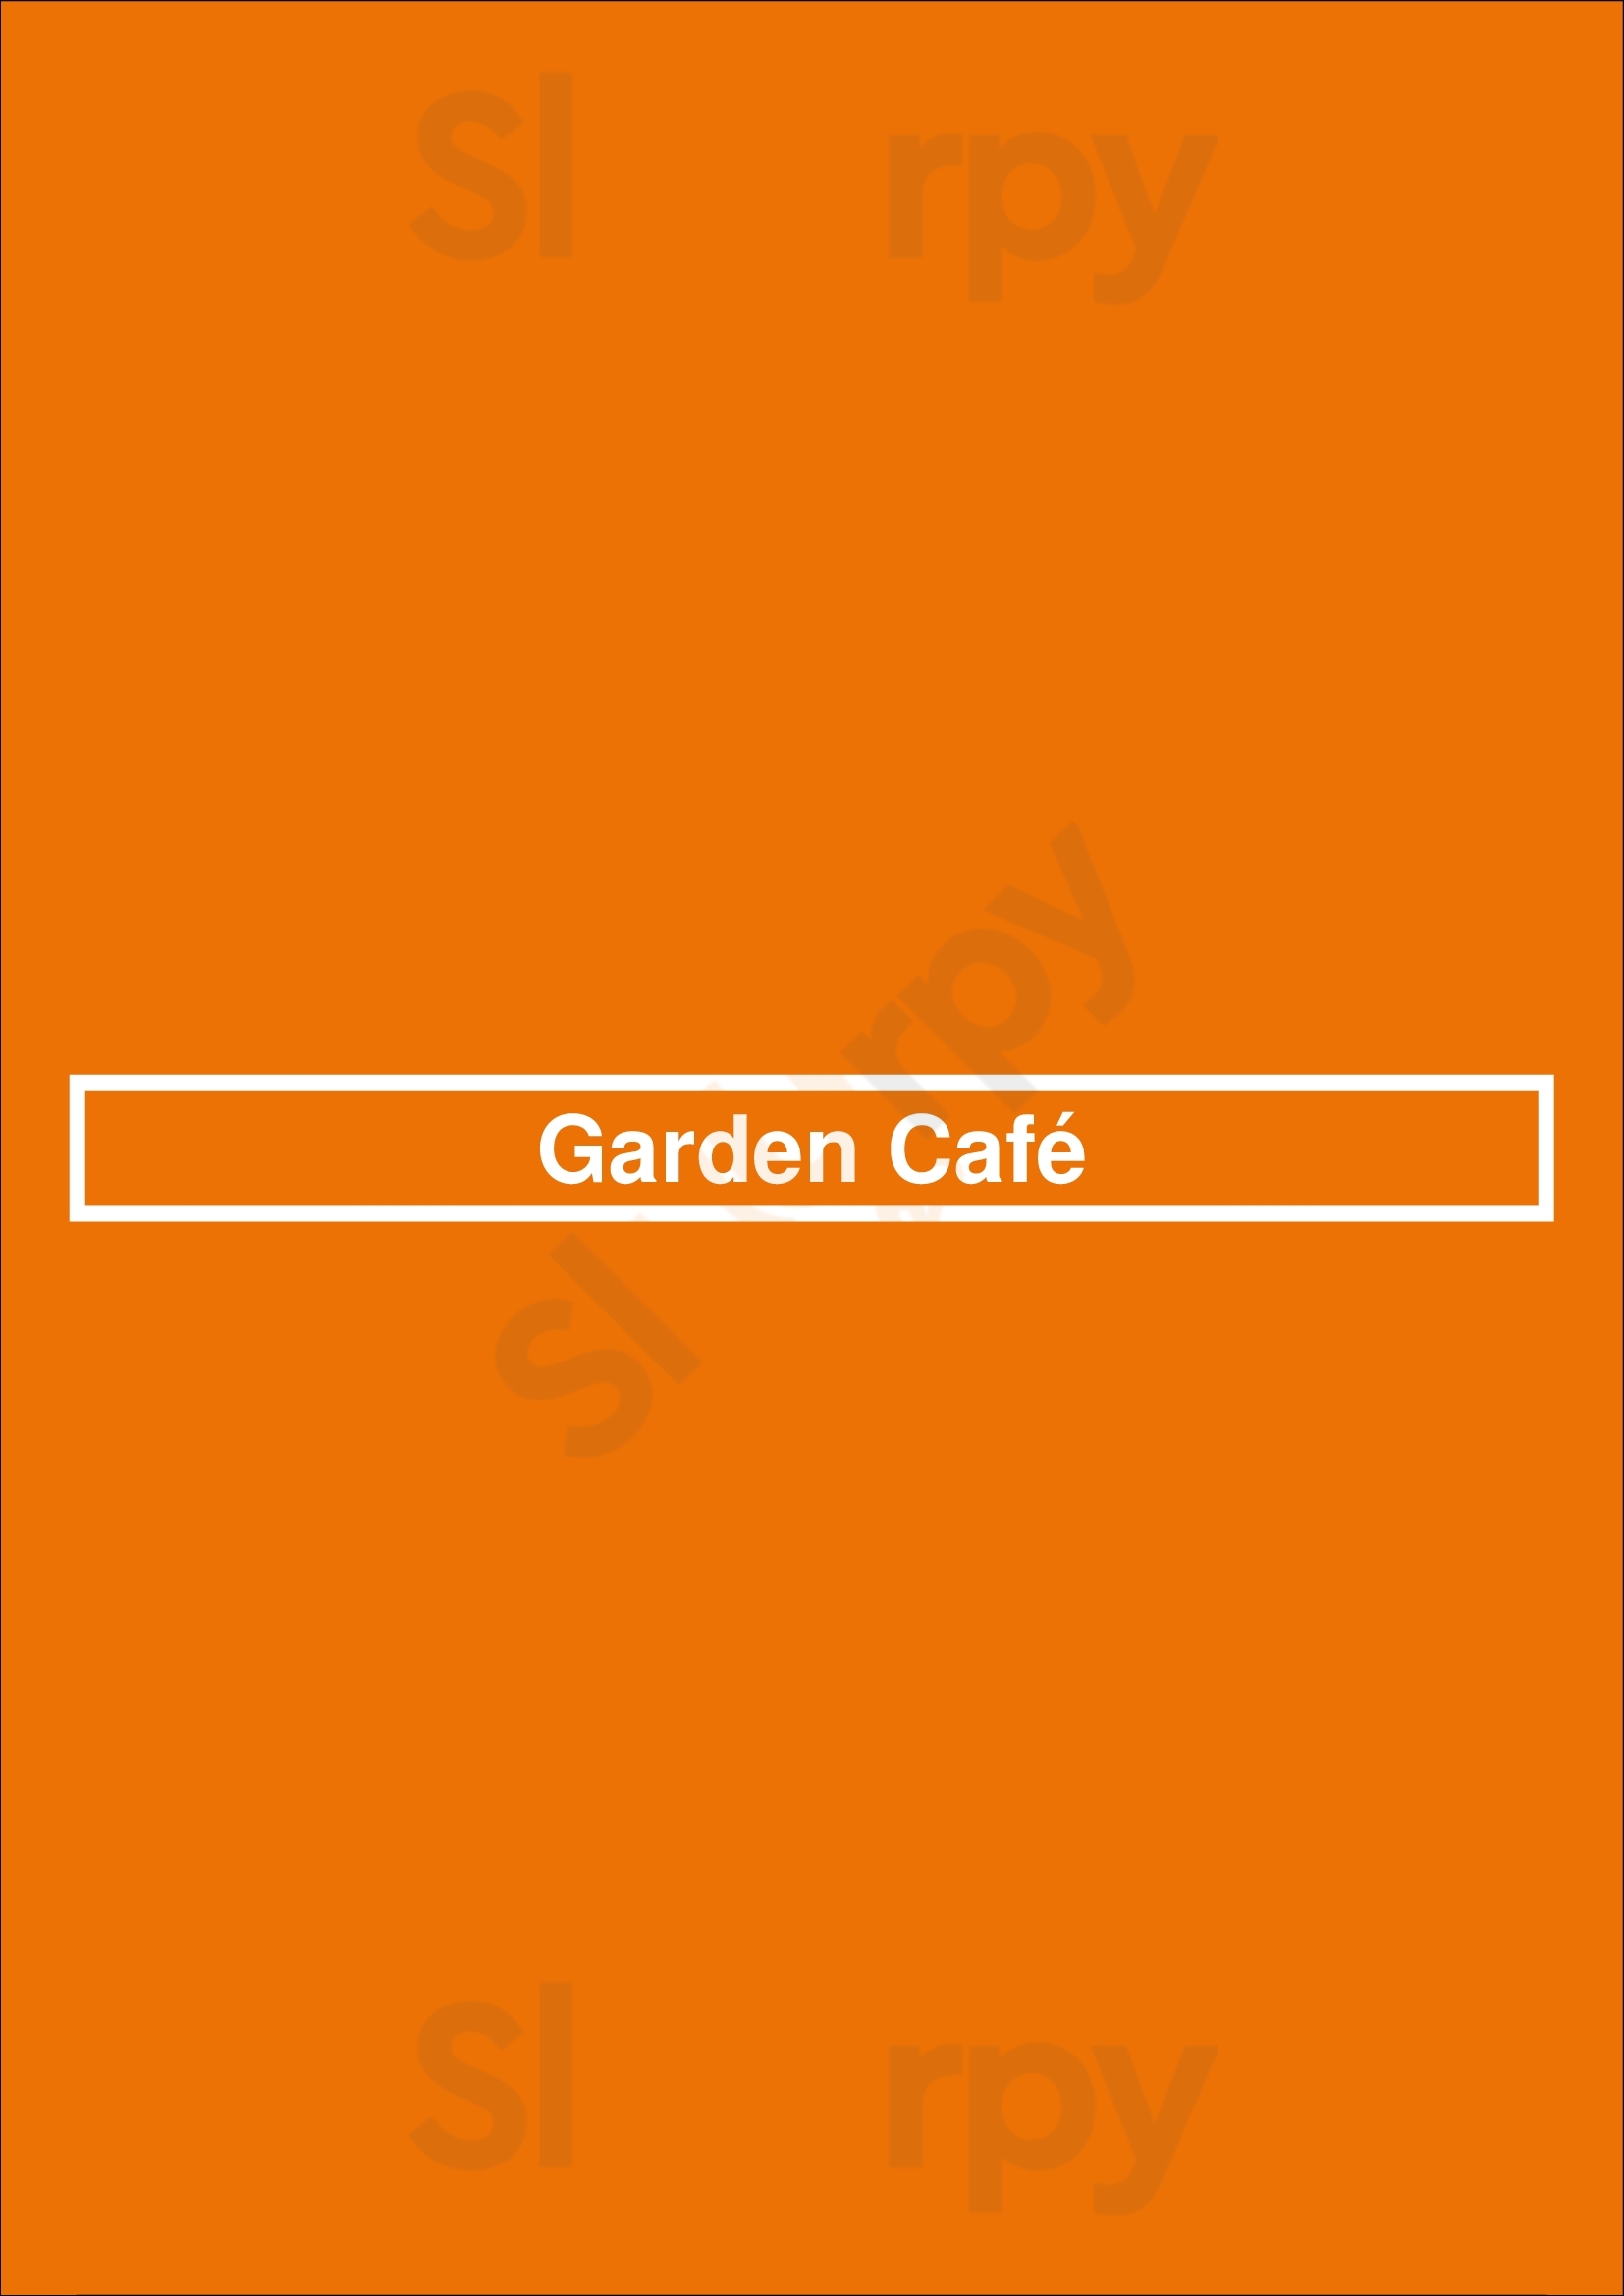 Garden Café Boulogne-Billancourt Menu - 1